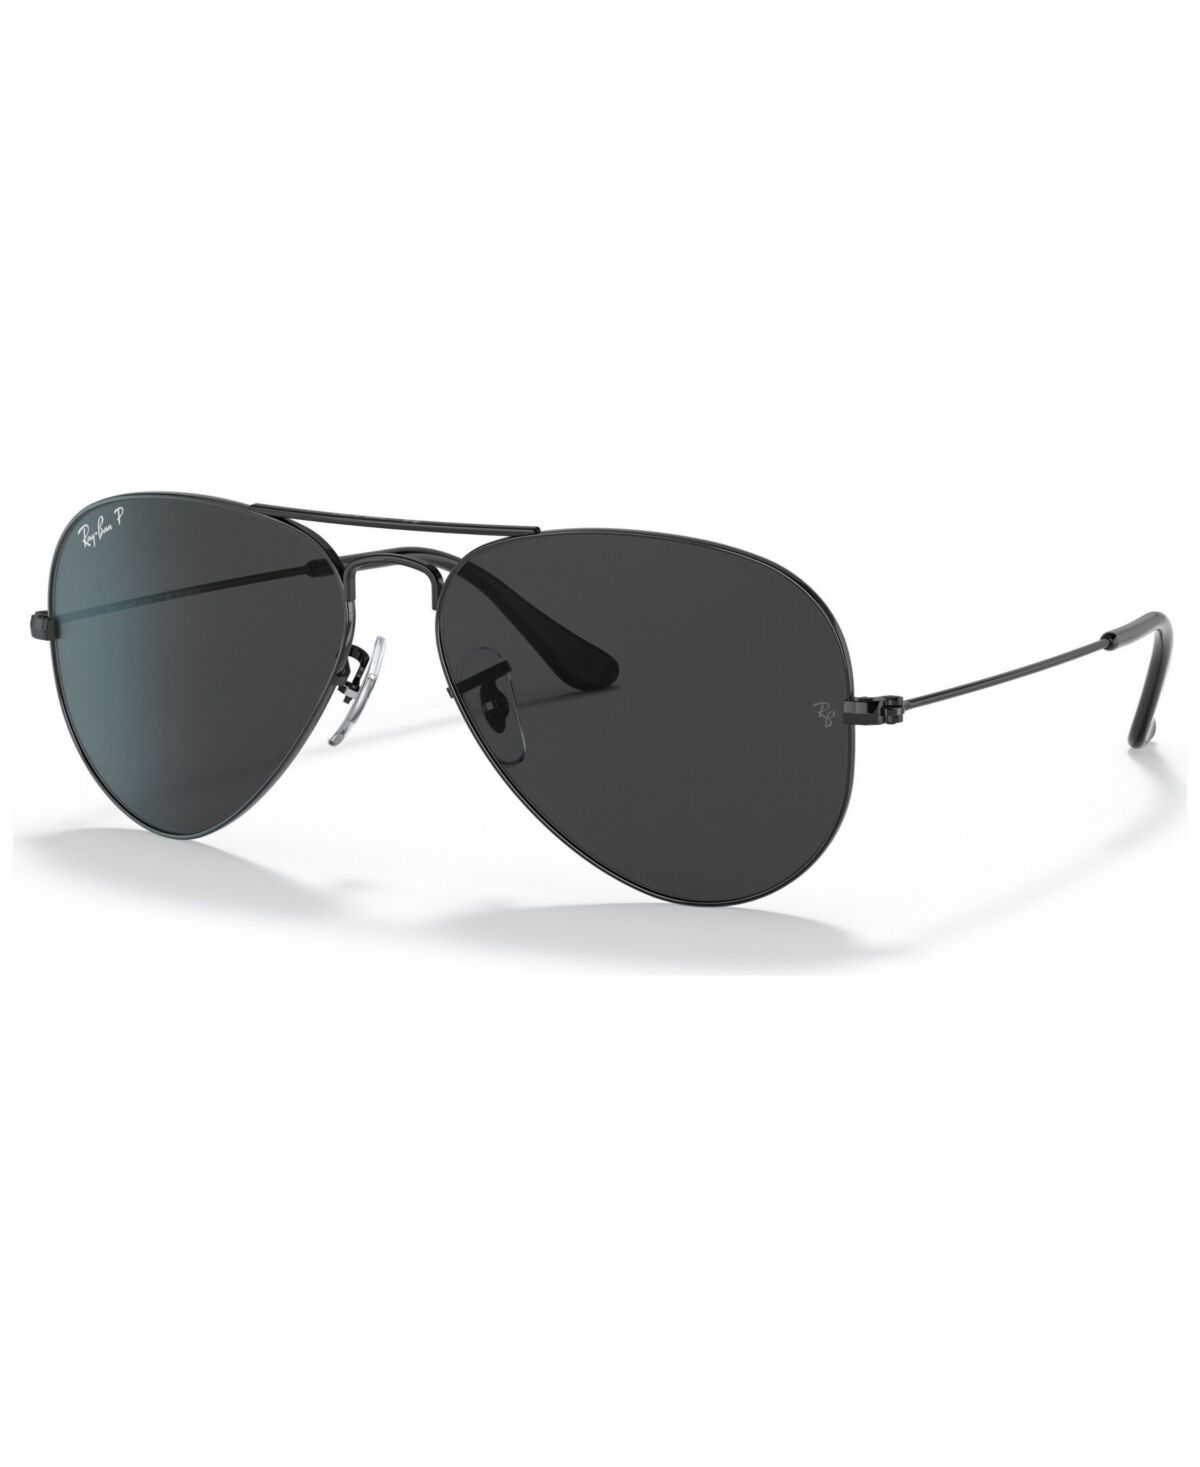 Ray-Ban Unisex Aviator Total Black Polarized Sunglasses, RB3025 - BLACK/POLAR BLACK